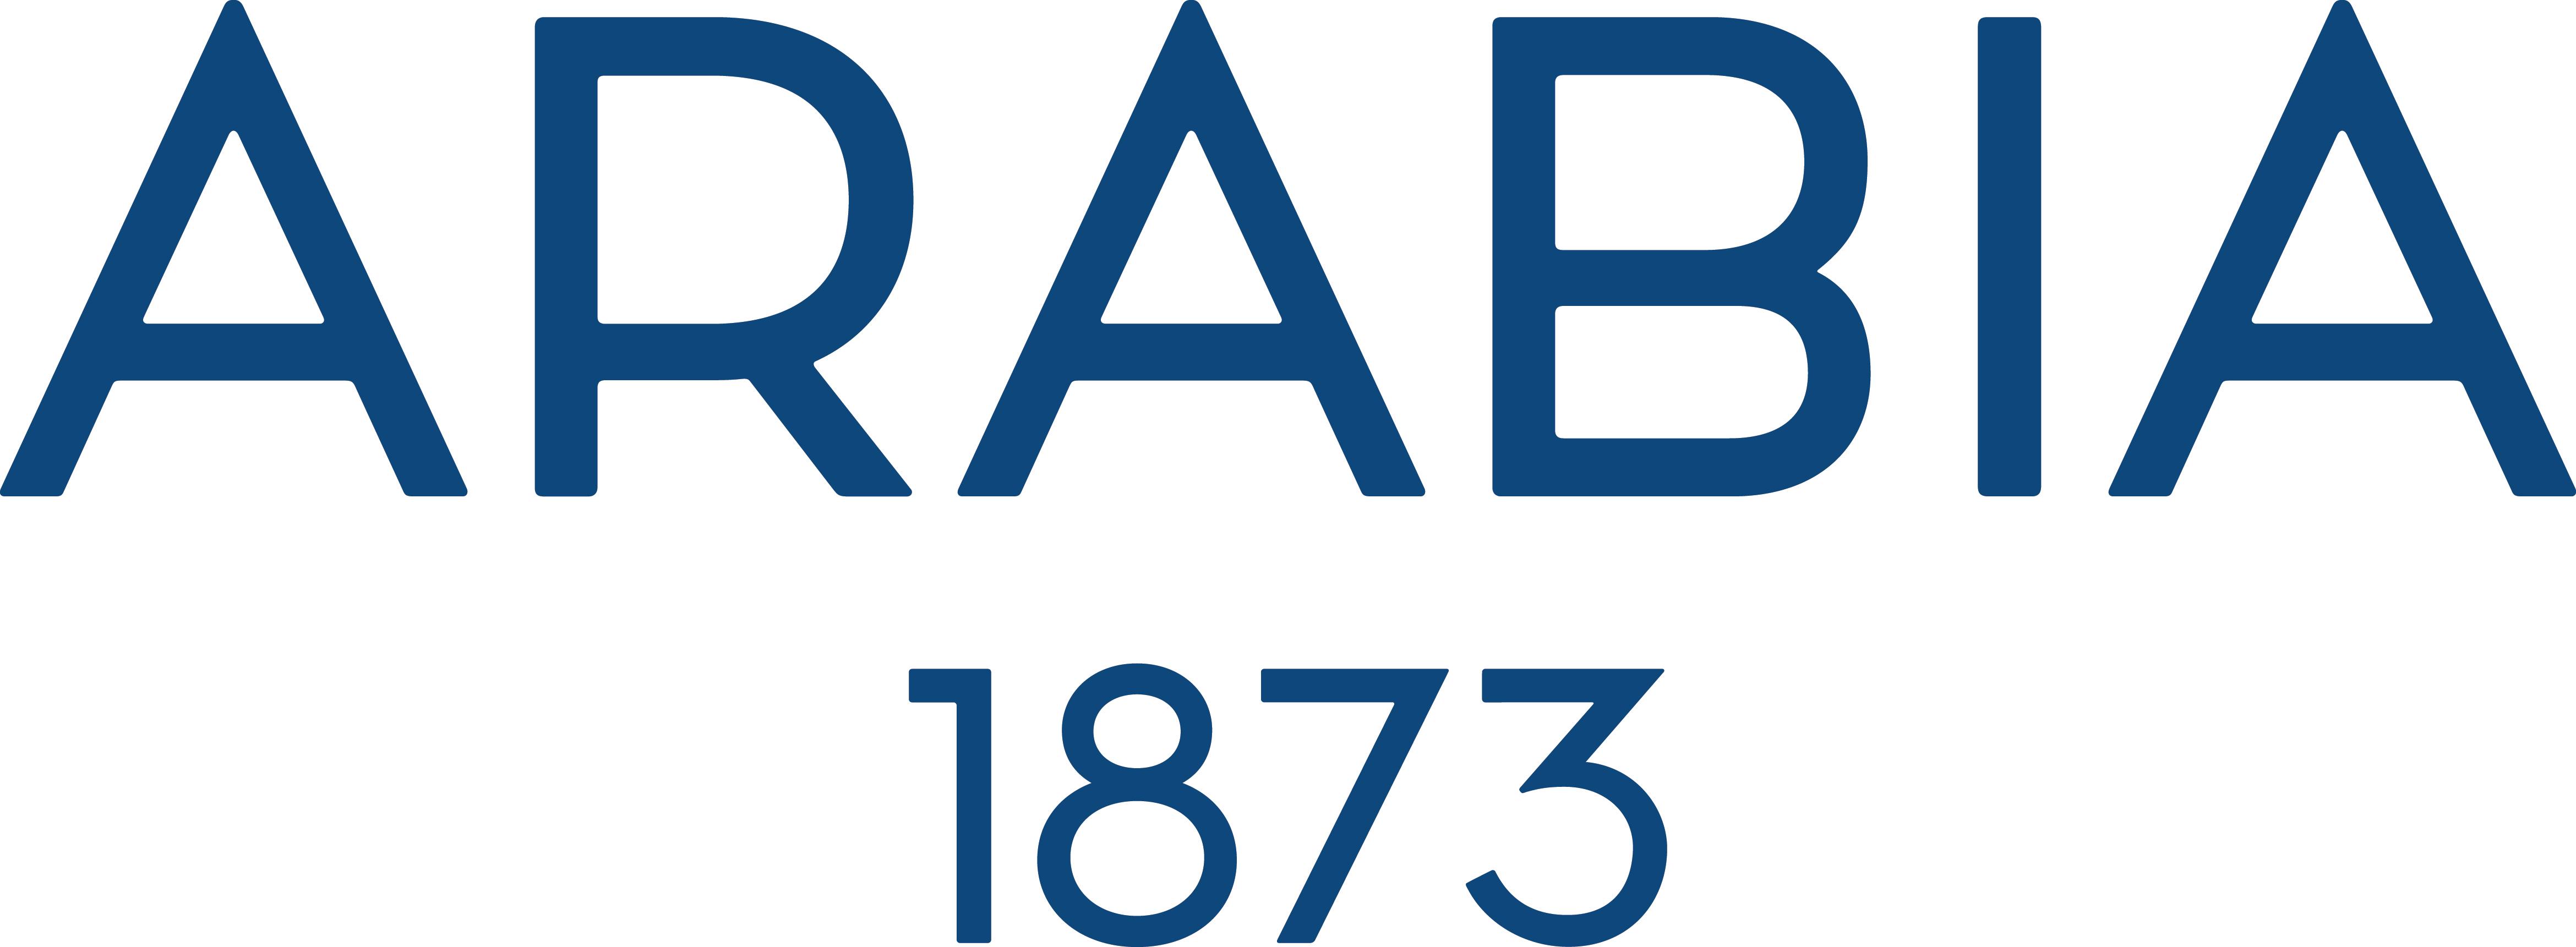 Arabia-logo